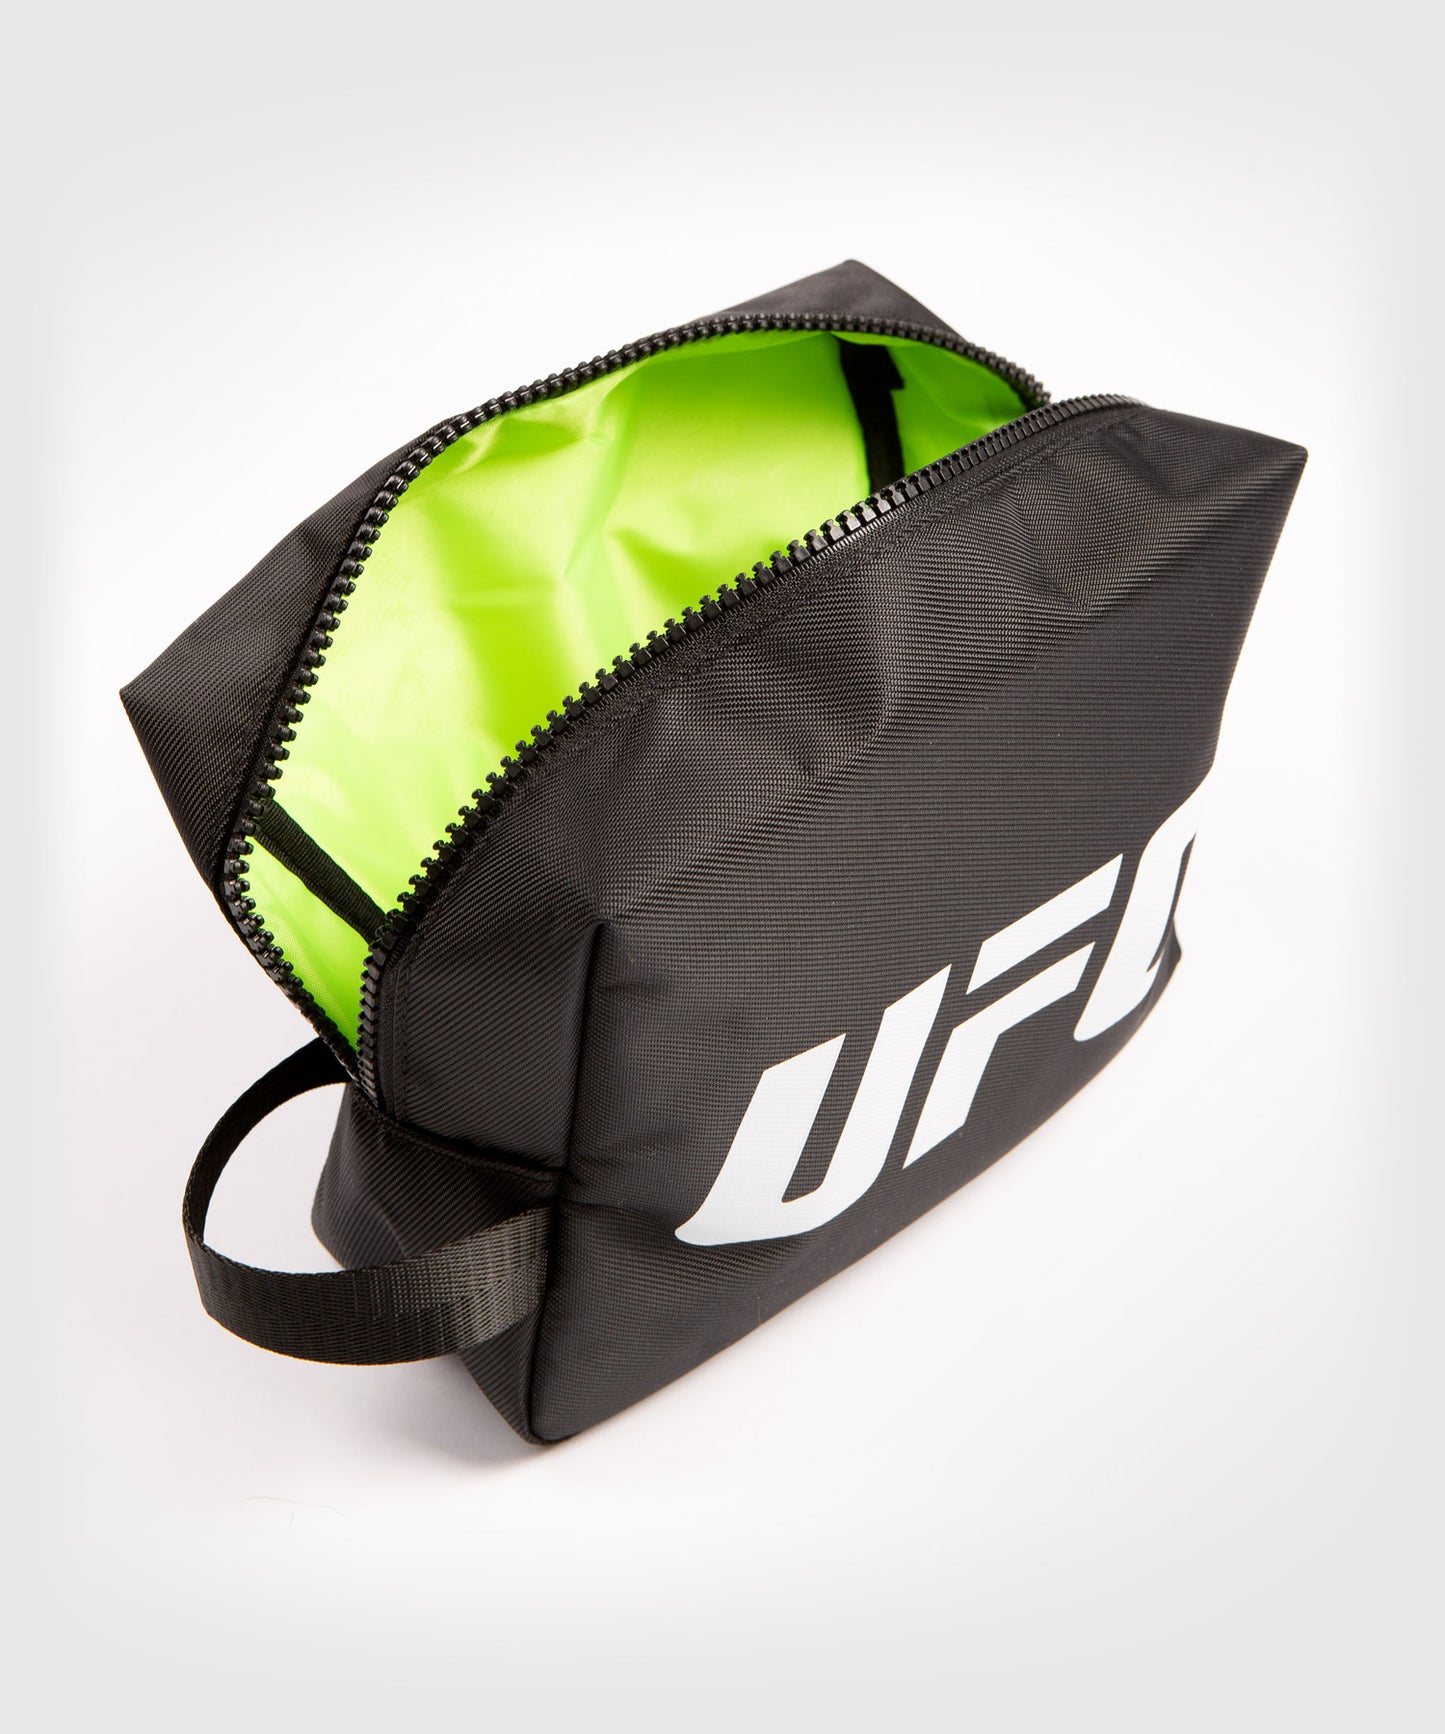 UFC Venum Authentic Fight Week Gear Bag